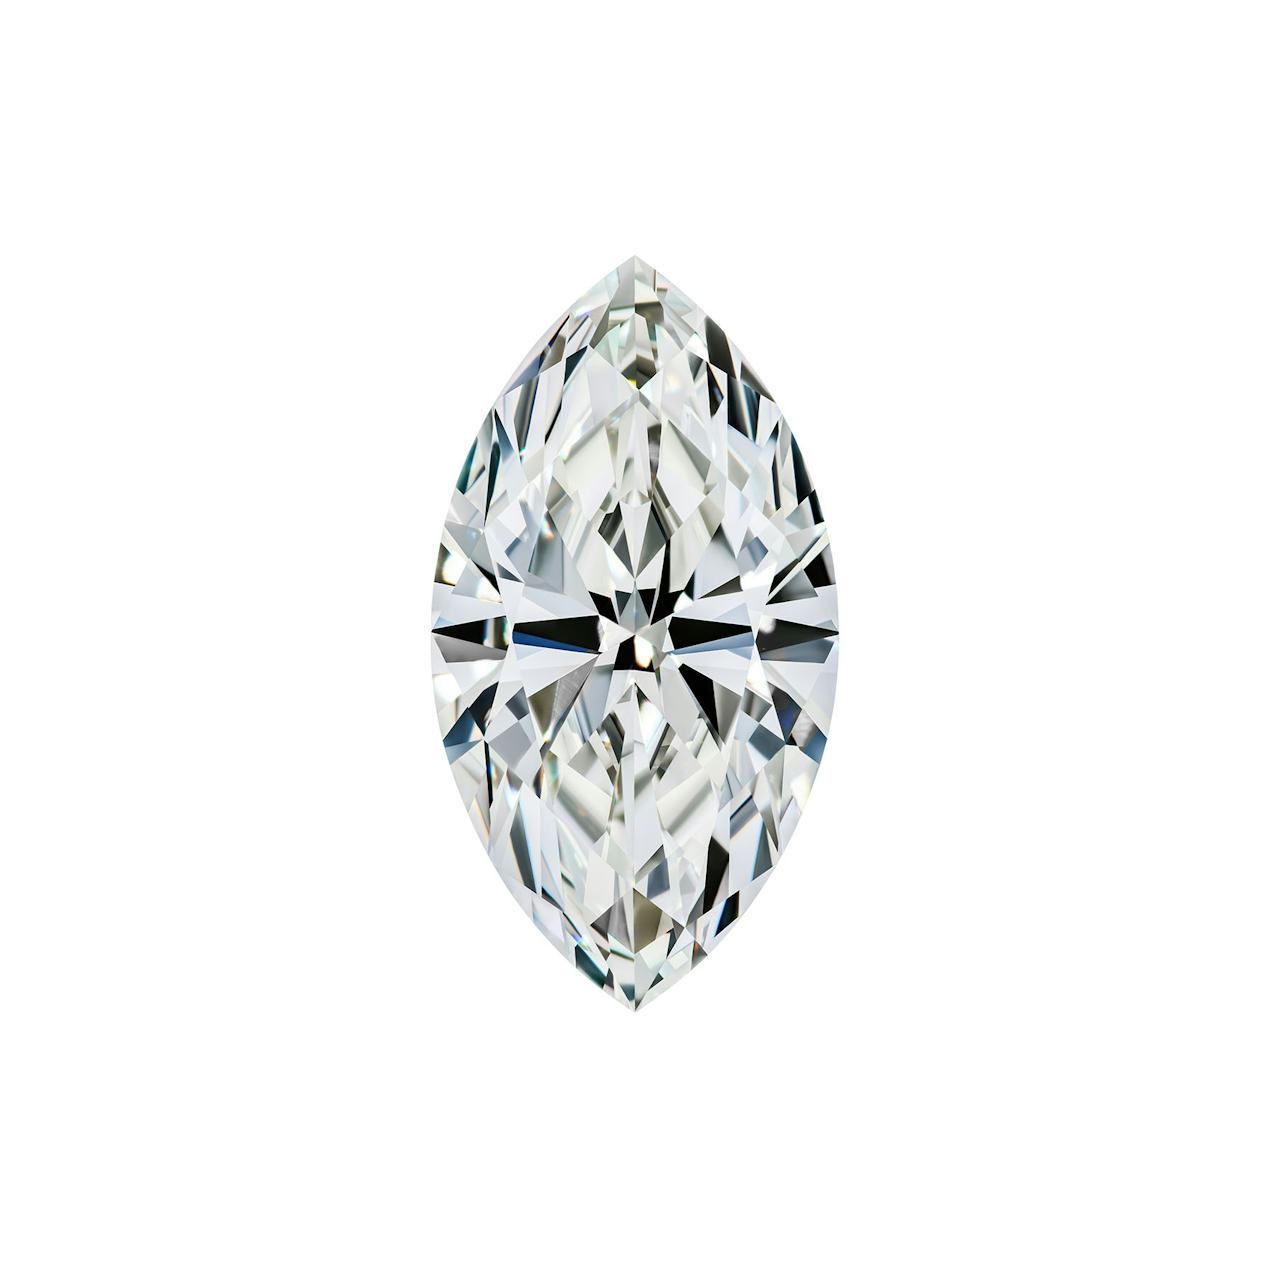 2 Carat Marquise Cut Diamonds